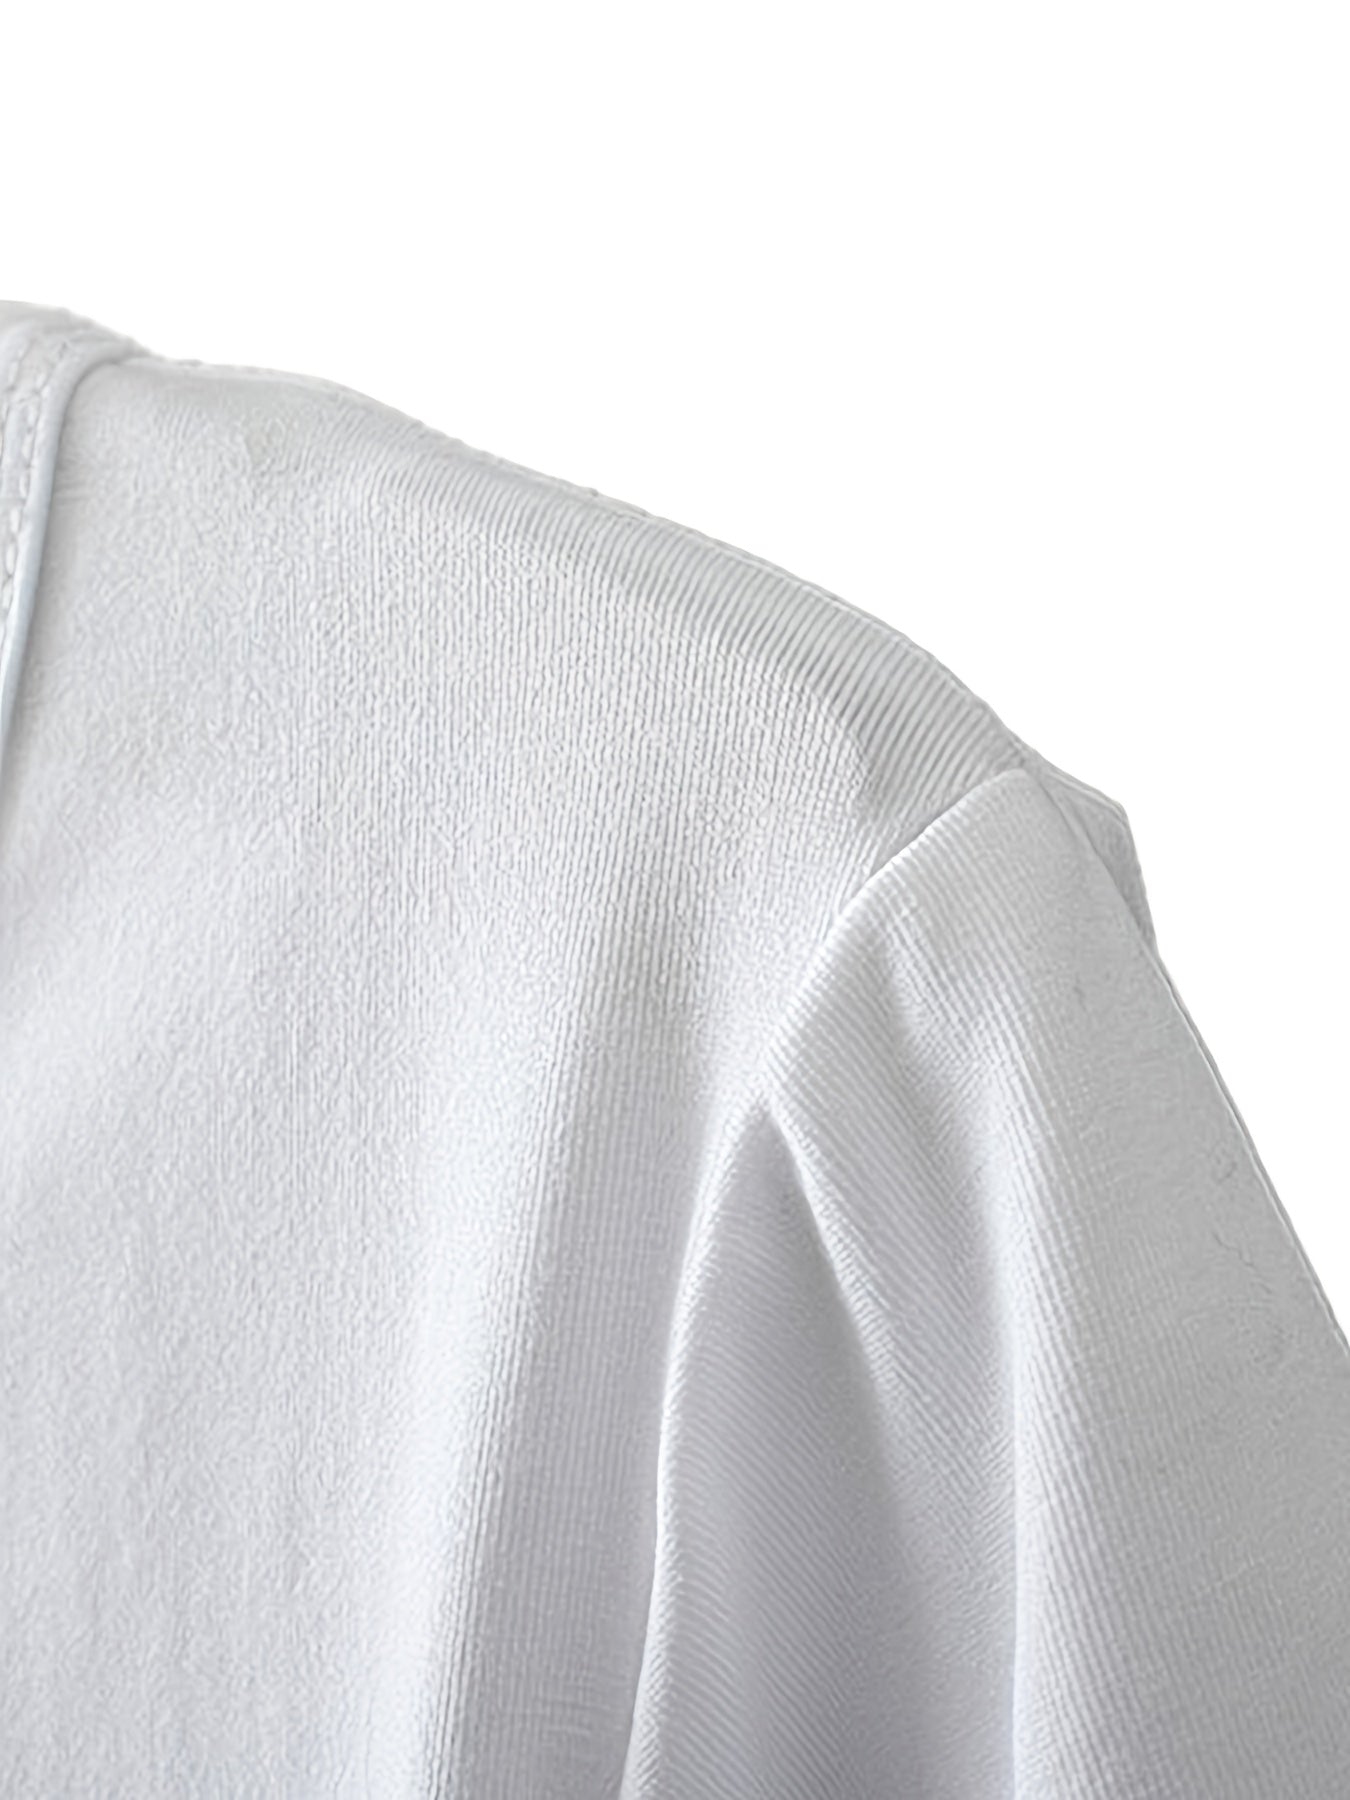 Antmvs Plus Size Casual T-shirt, Women's Plus Letter Print Short Sleeve Round Neck Medium Stretch T-shirt